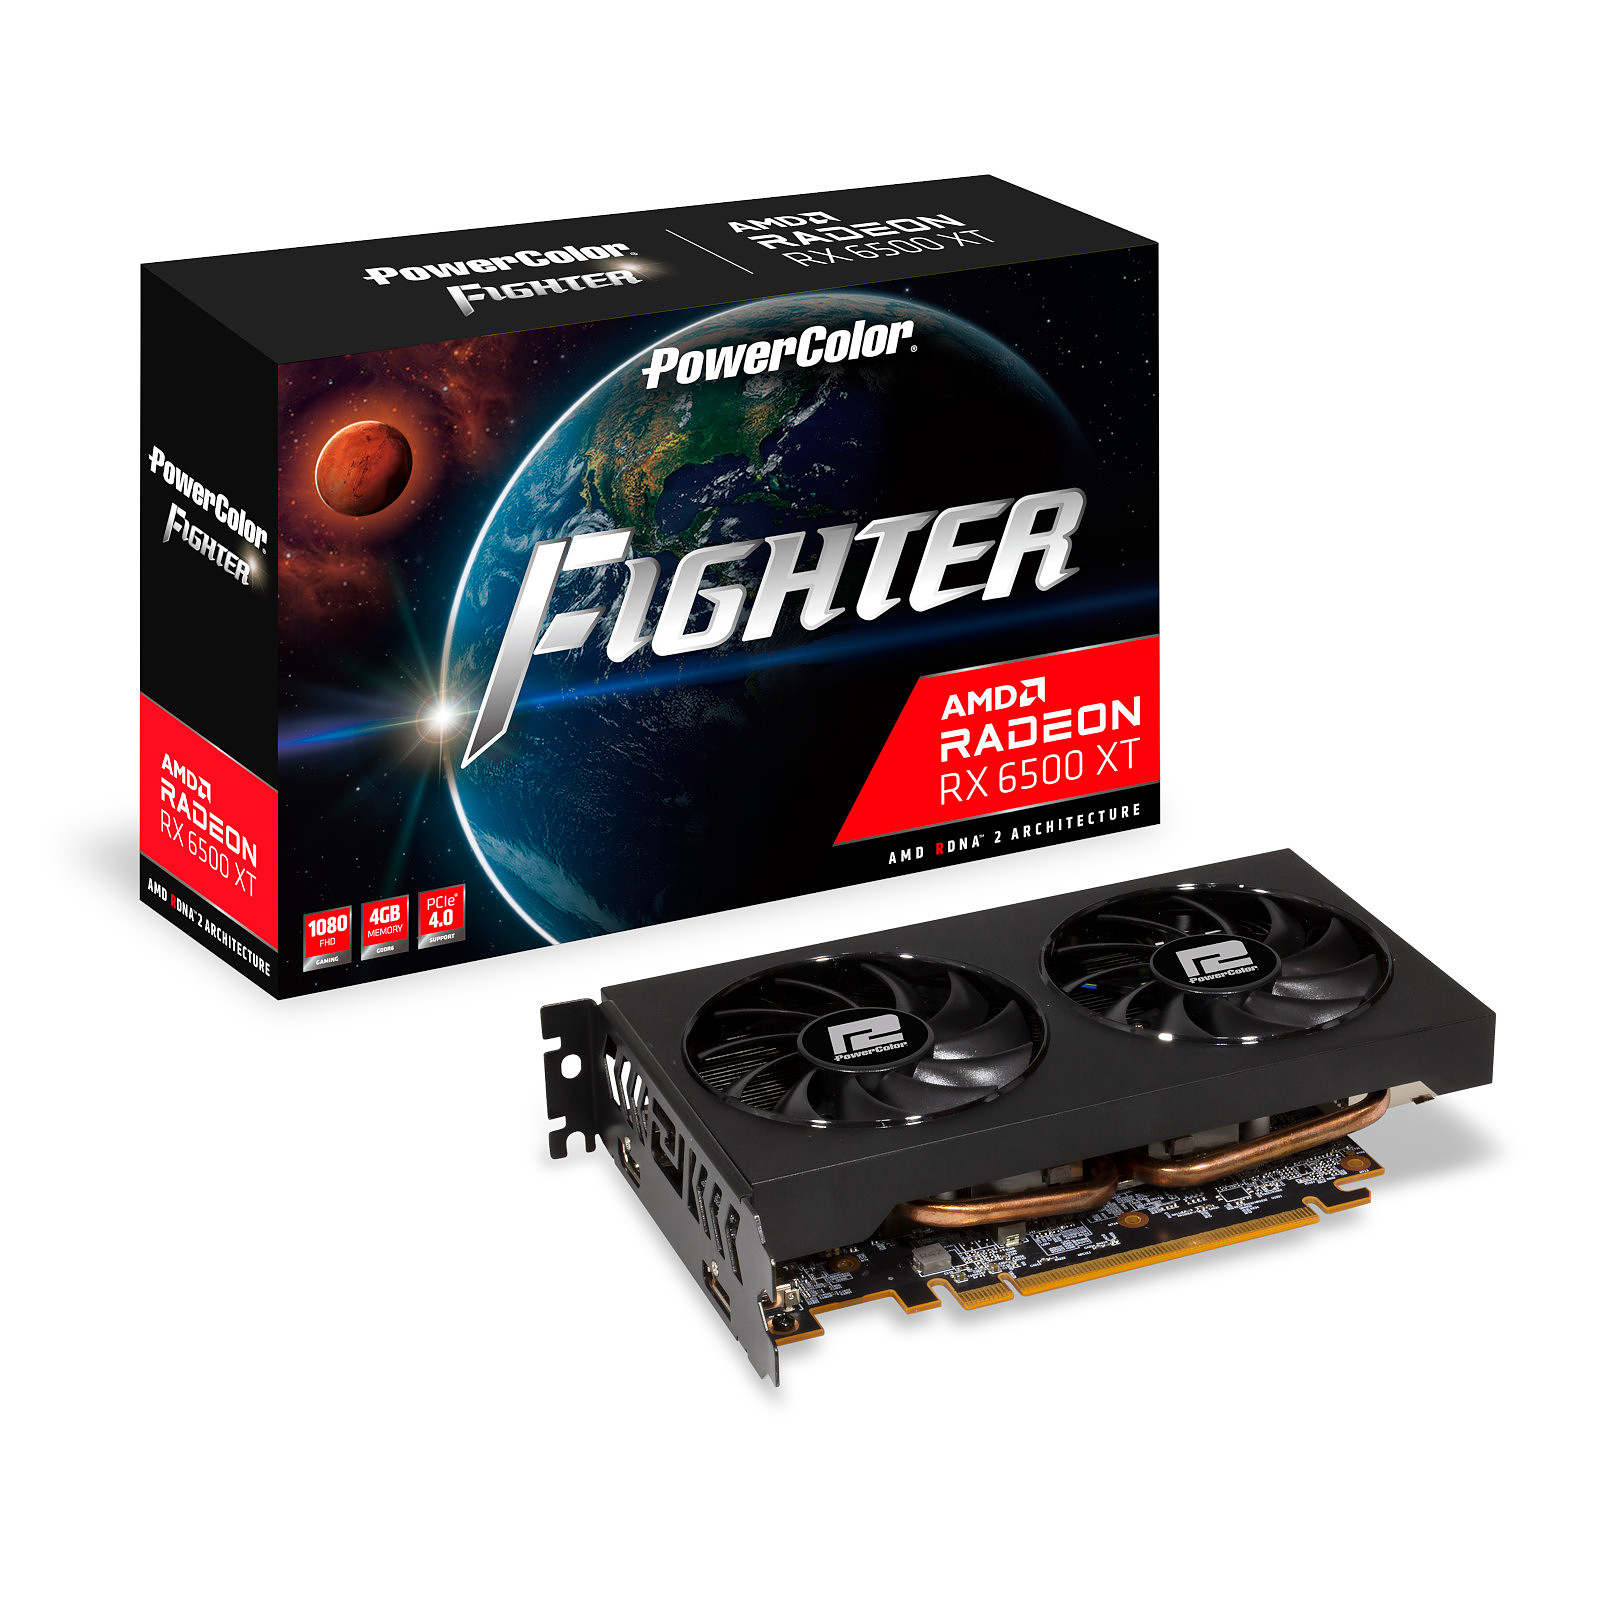 PowerColor Fighter AMD Radeon RX 6500 XT 4GB - Carte graphique PowerColor